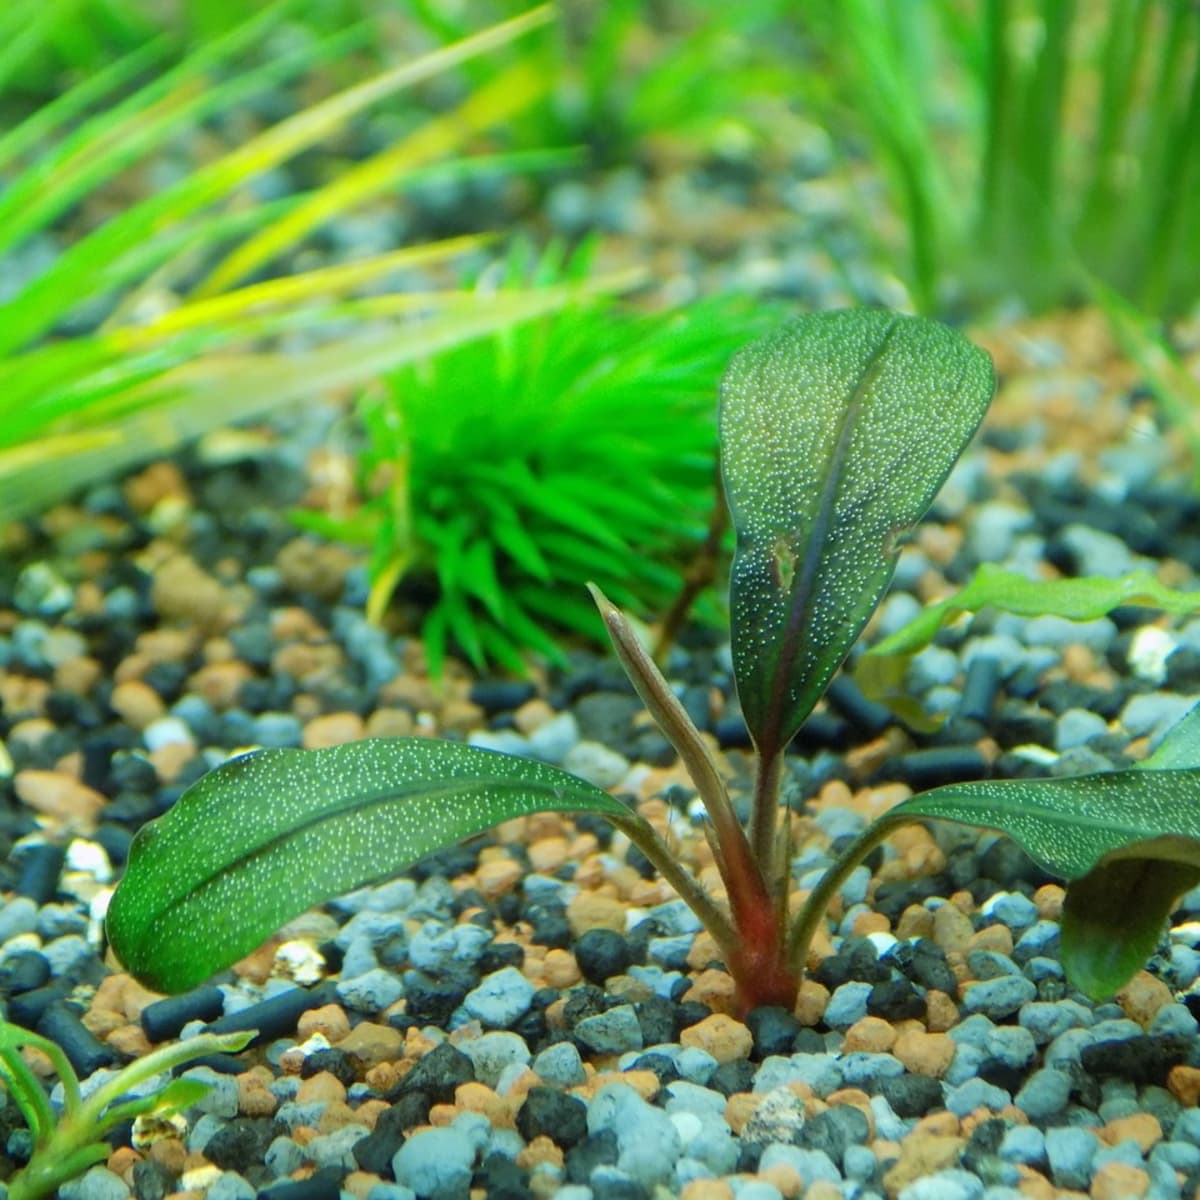 Using Live Plants in Your Home Aquarium